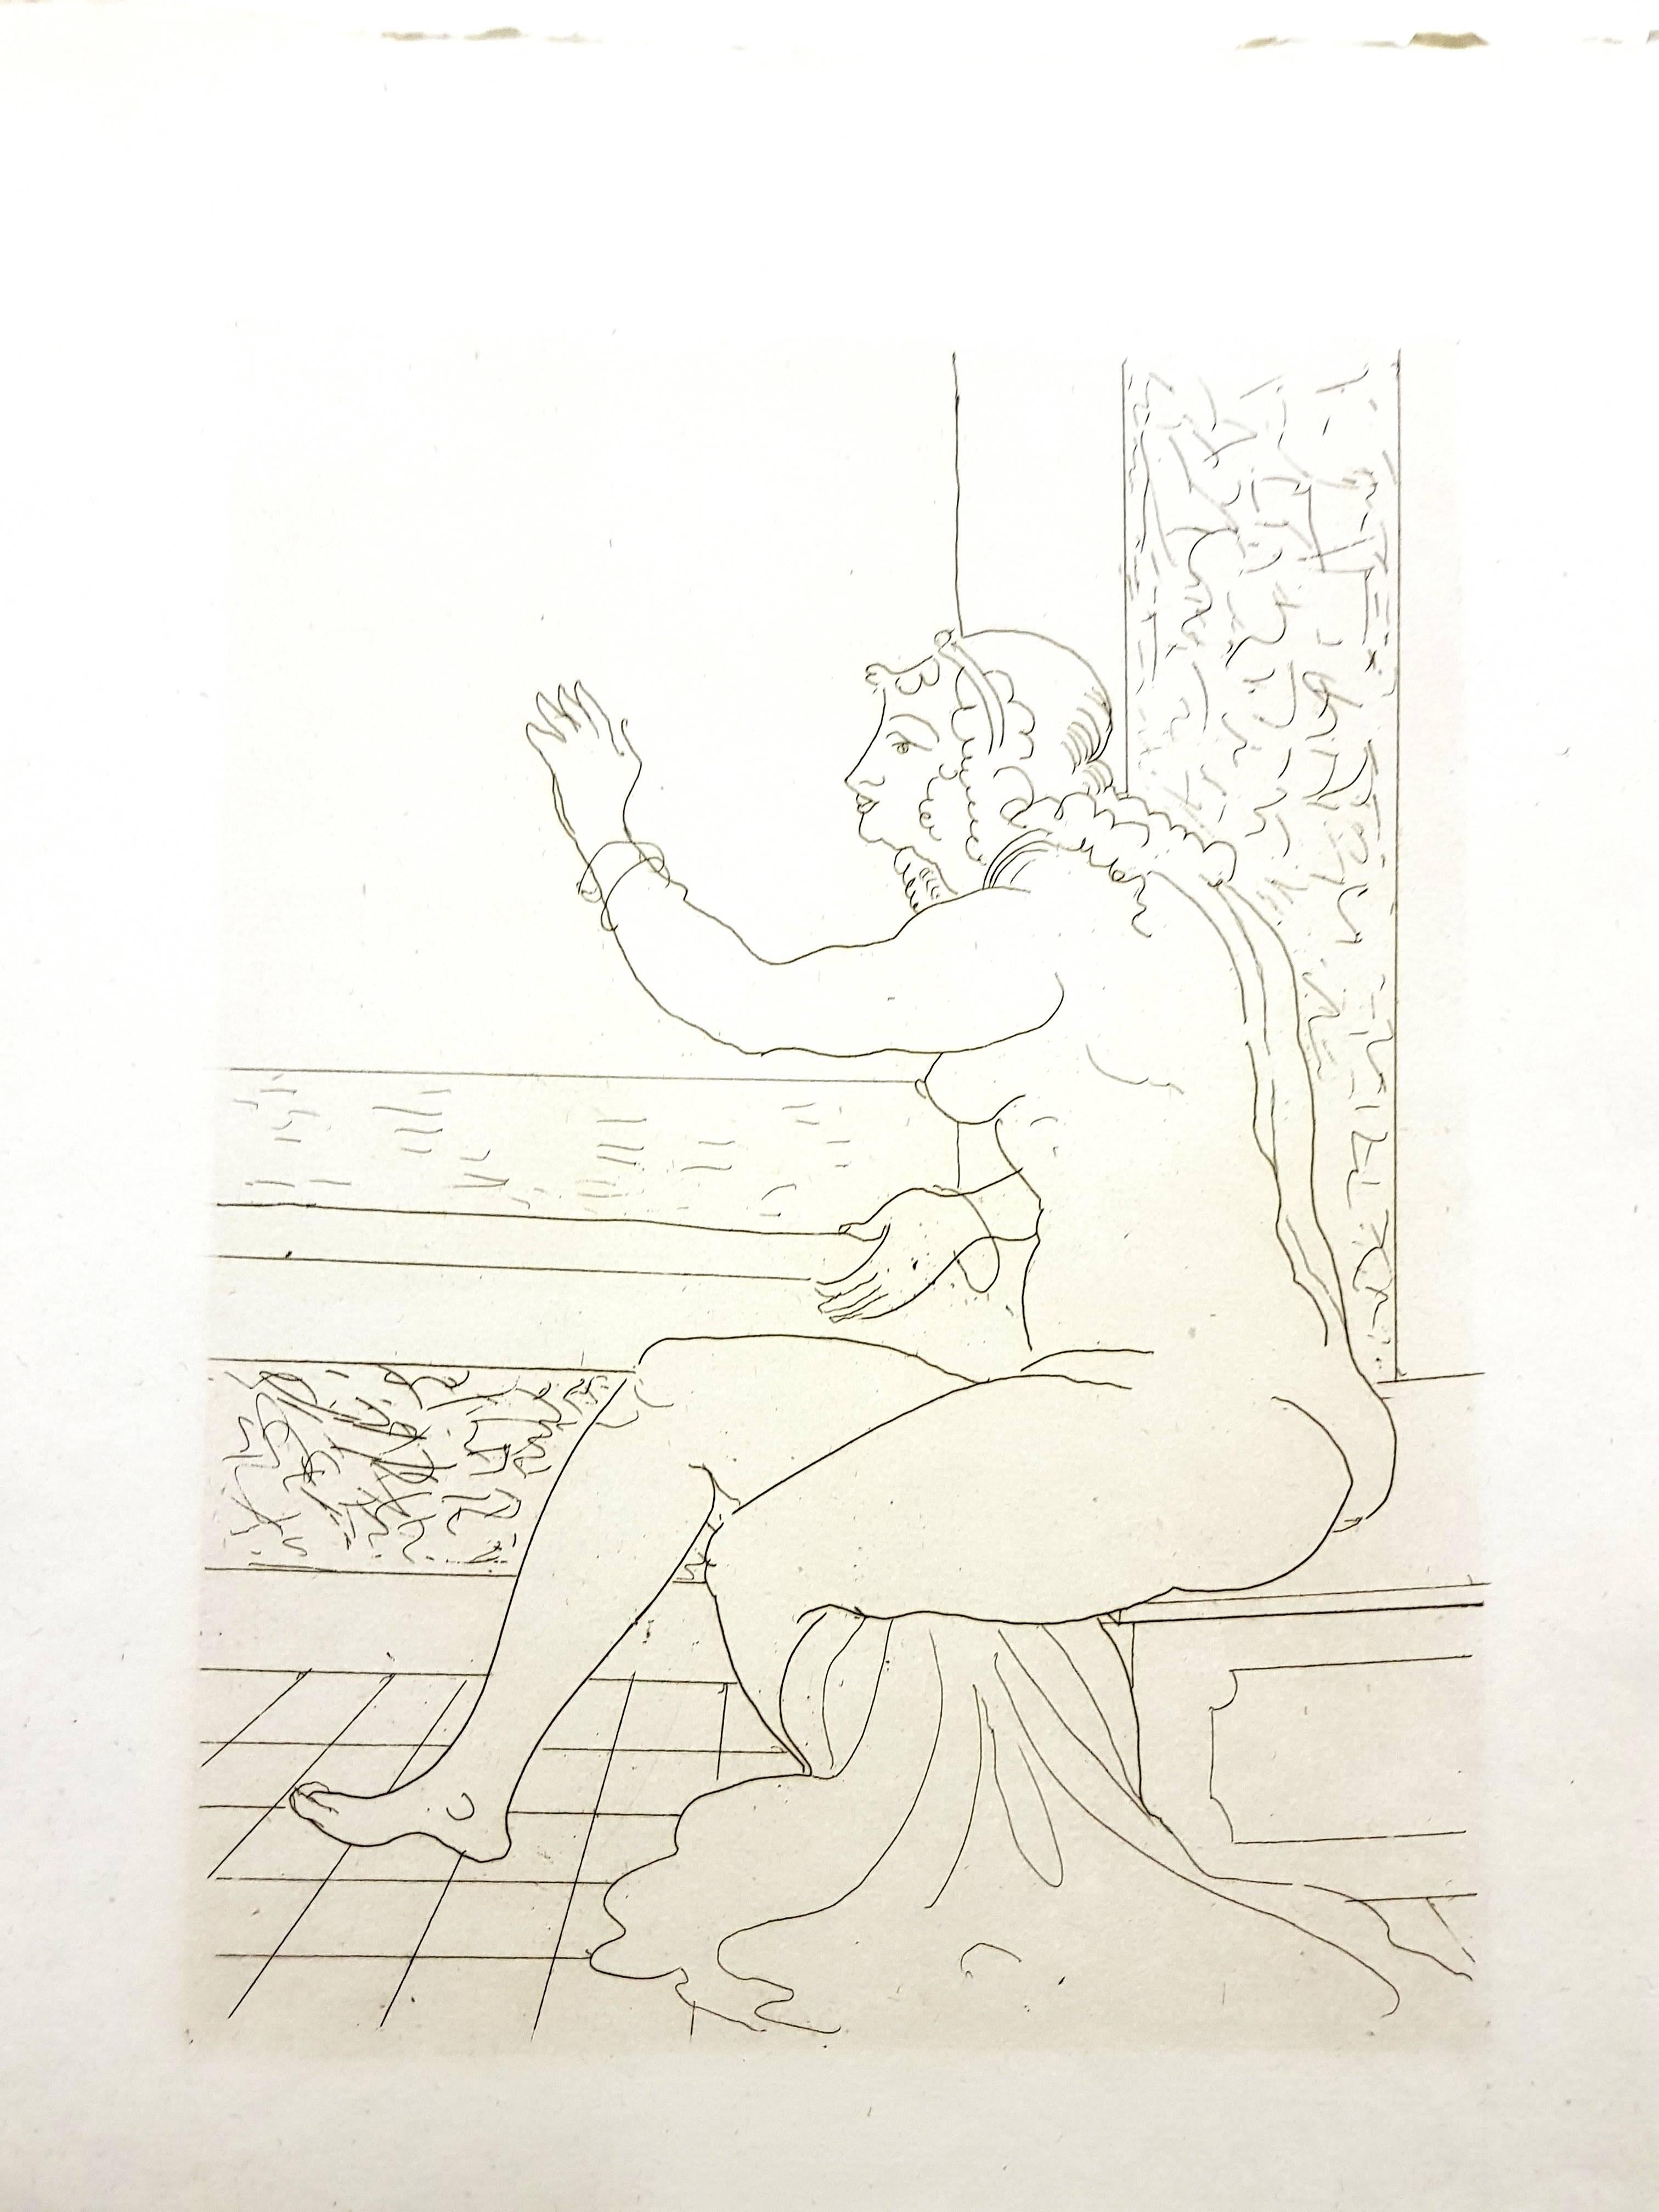 André Derain - Ovid's Heroides 
Original Etching
Edition of 134
Dimensions: 32 x 25 cm
Ovide [Marcel Prevost], Héroïdes, Paris, Société des Cent-une, 1938

Andre Derain was born in 1880 in Chatou, an artist colony outside Paris. In 1898, he enrolled